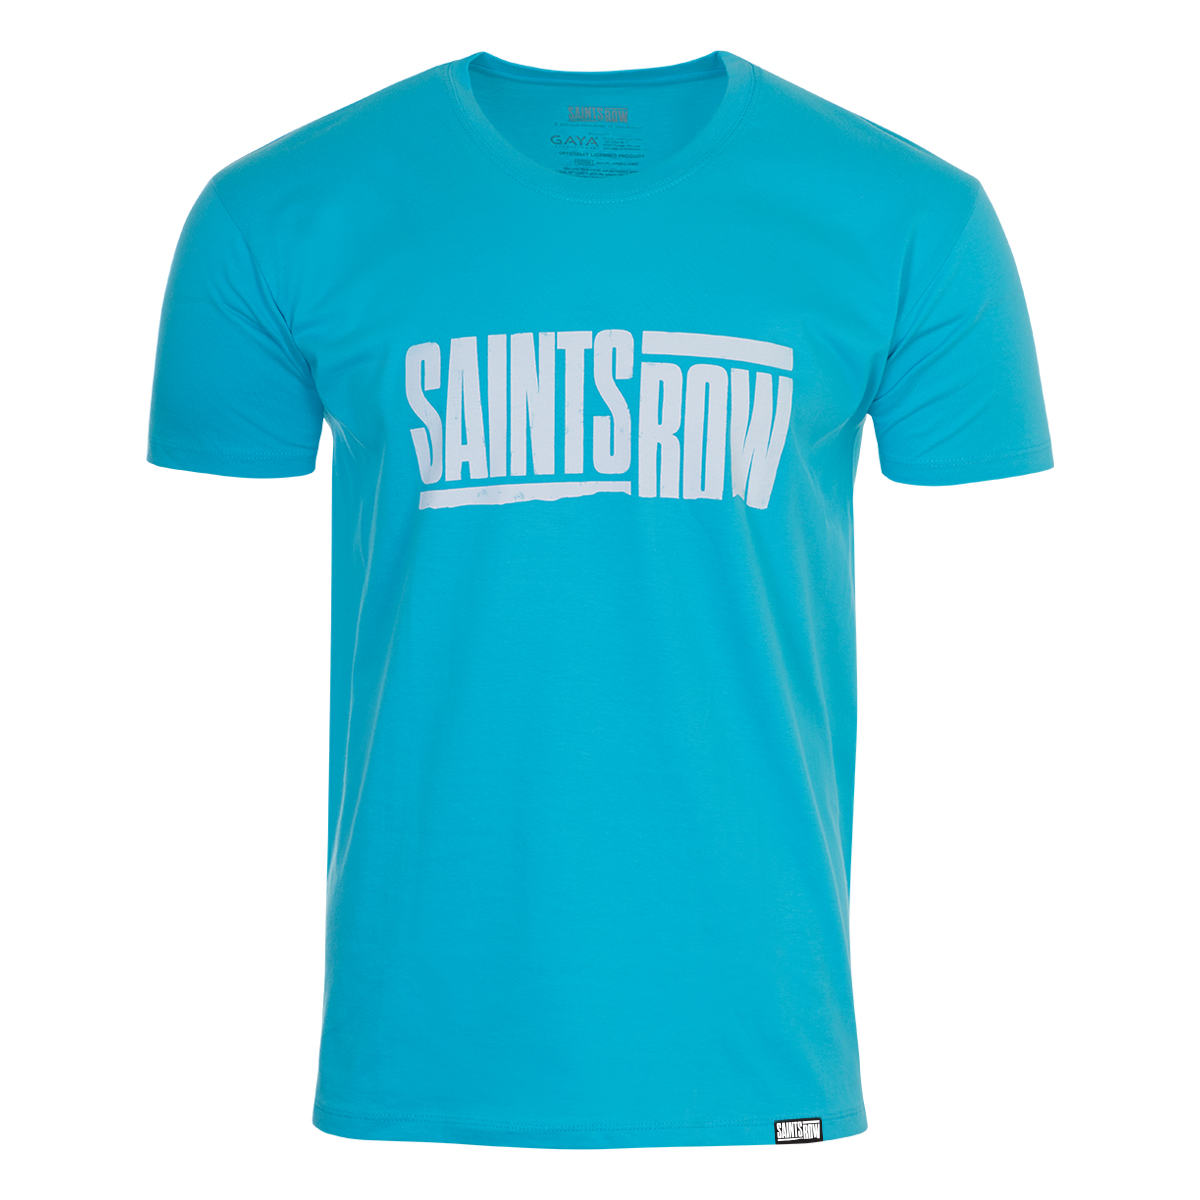 Saints Row T-Shirt Logo Blue